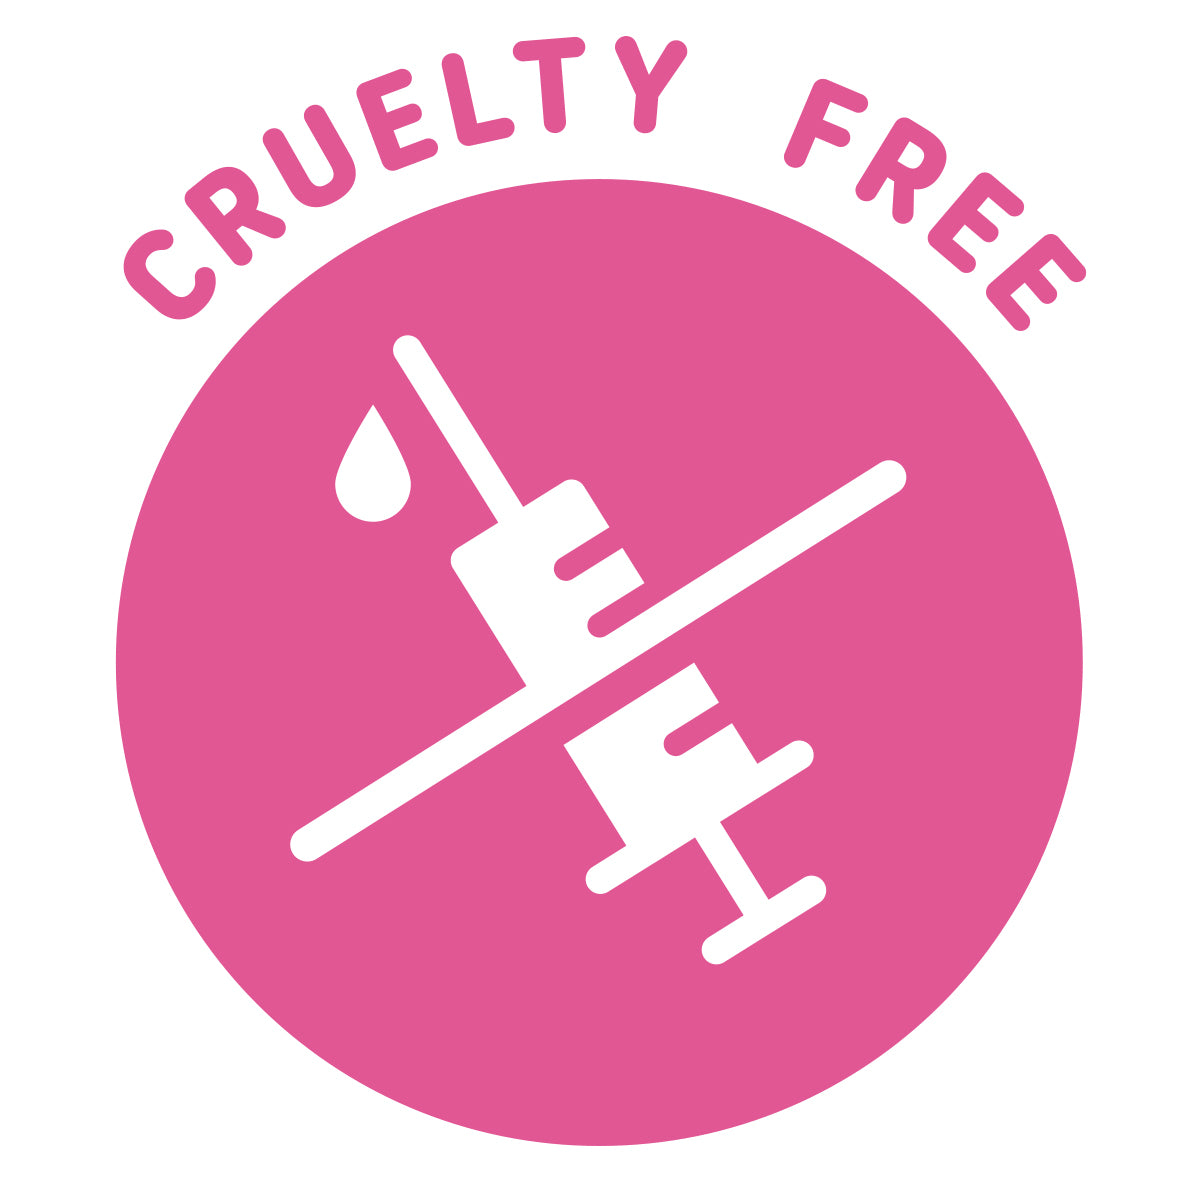 Doglyness cruelty-free badge